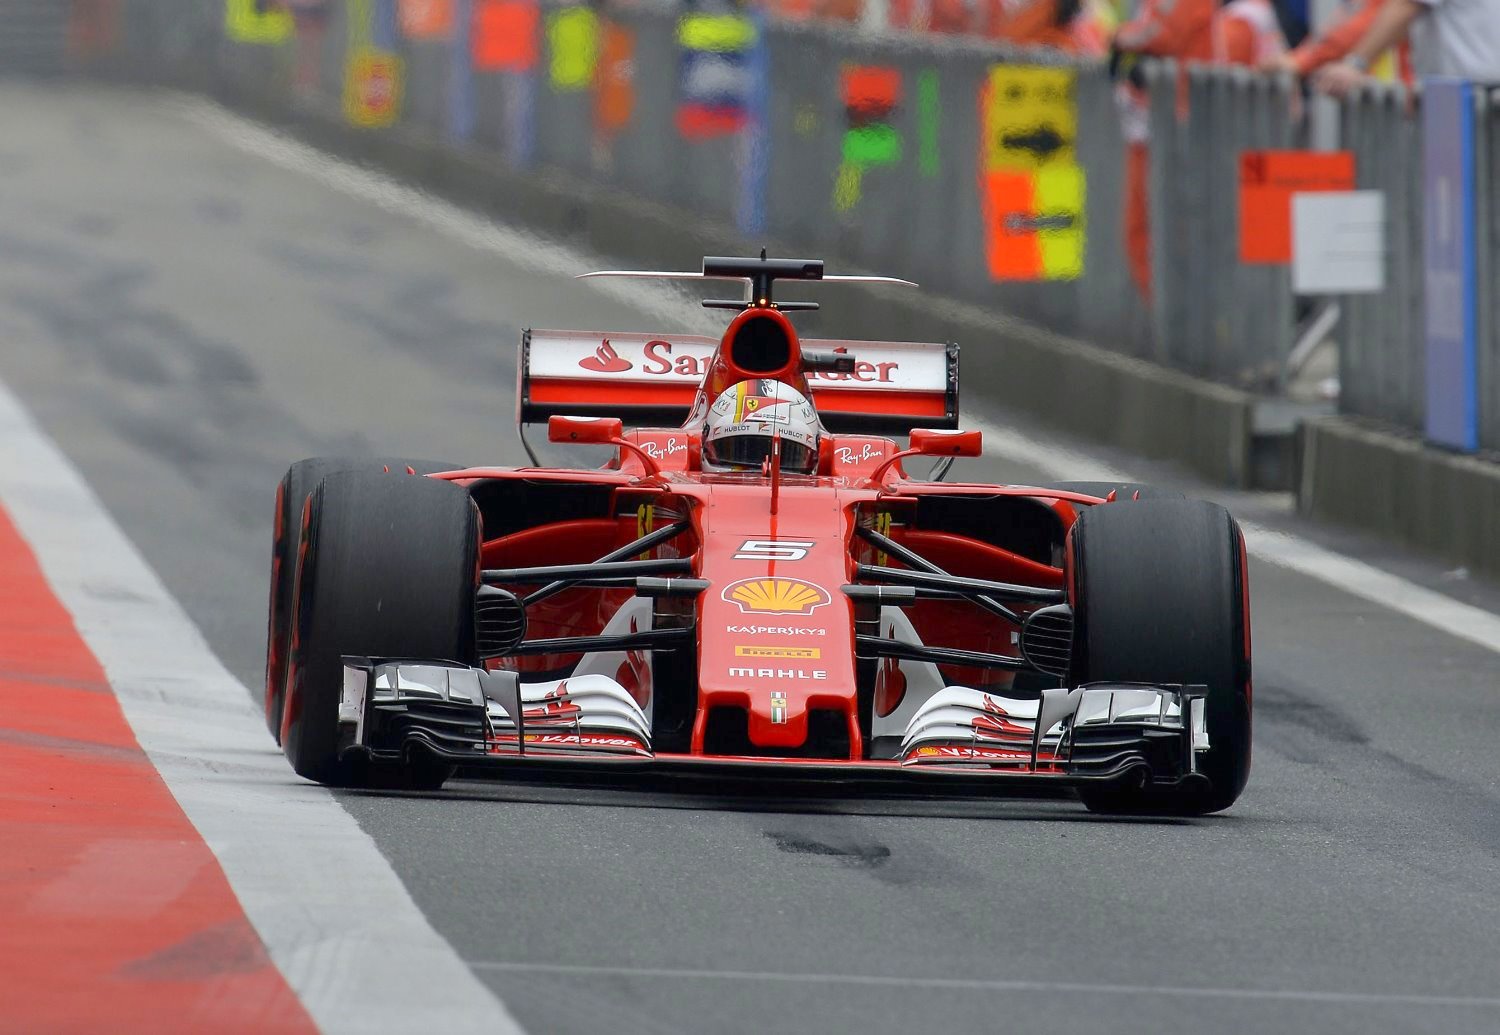 Vettel wasn't quite fast enough but it's a great battle between Mercedes and Ferrari